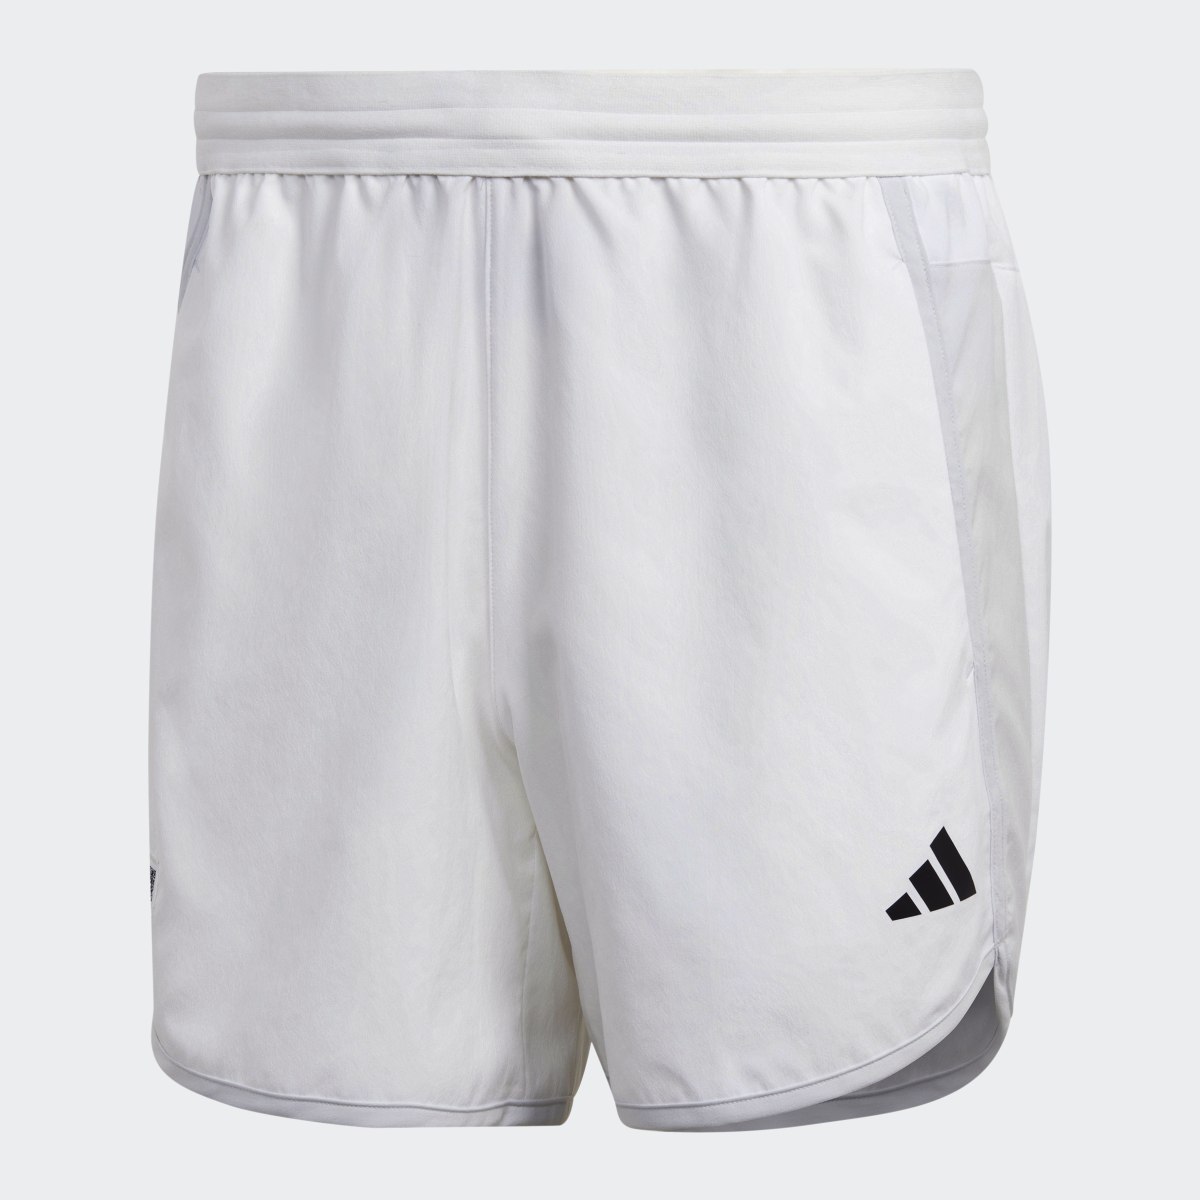 Adidas Made to be Remade Running Shorts. 4